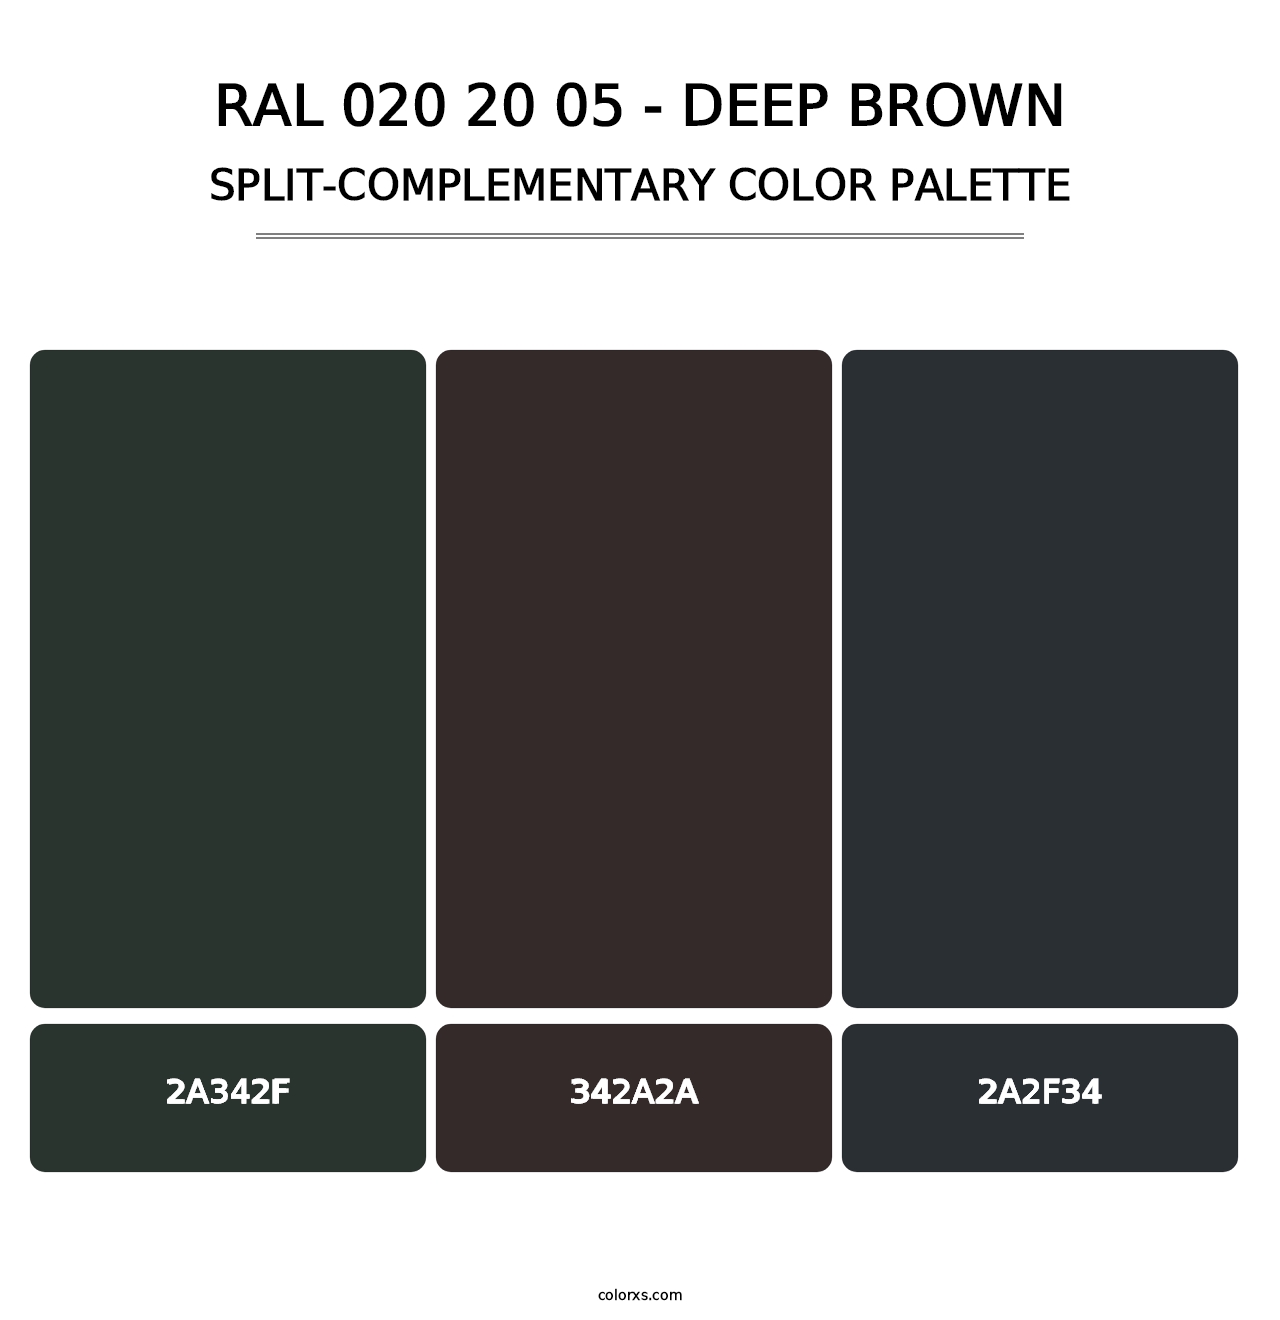 RAL 020 20 05 - Deep Brown - Split-Complementary Color Palette